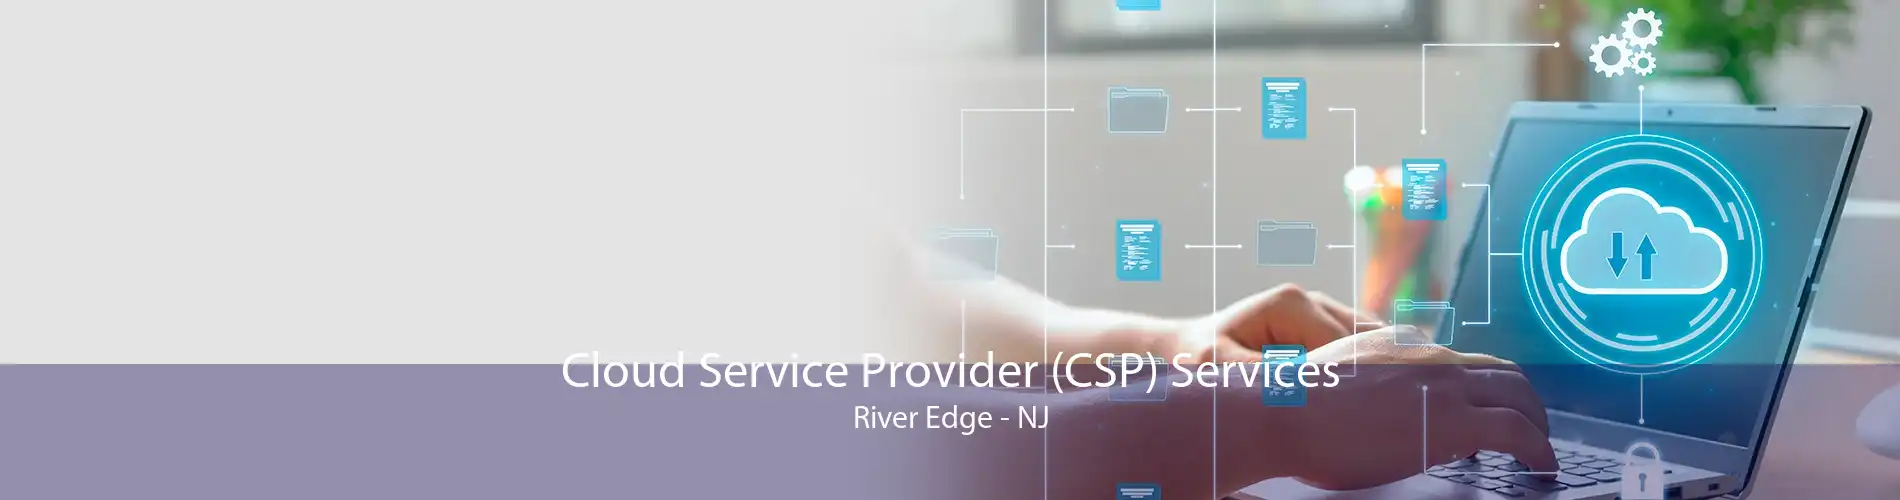 Cloud Service Provider (CSP) Services River Edge - NJ